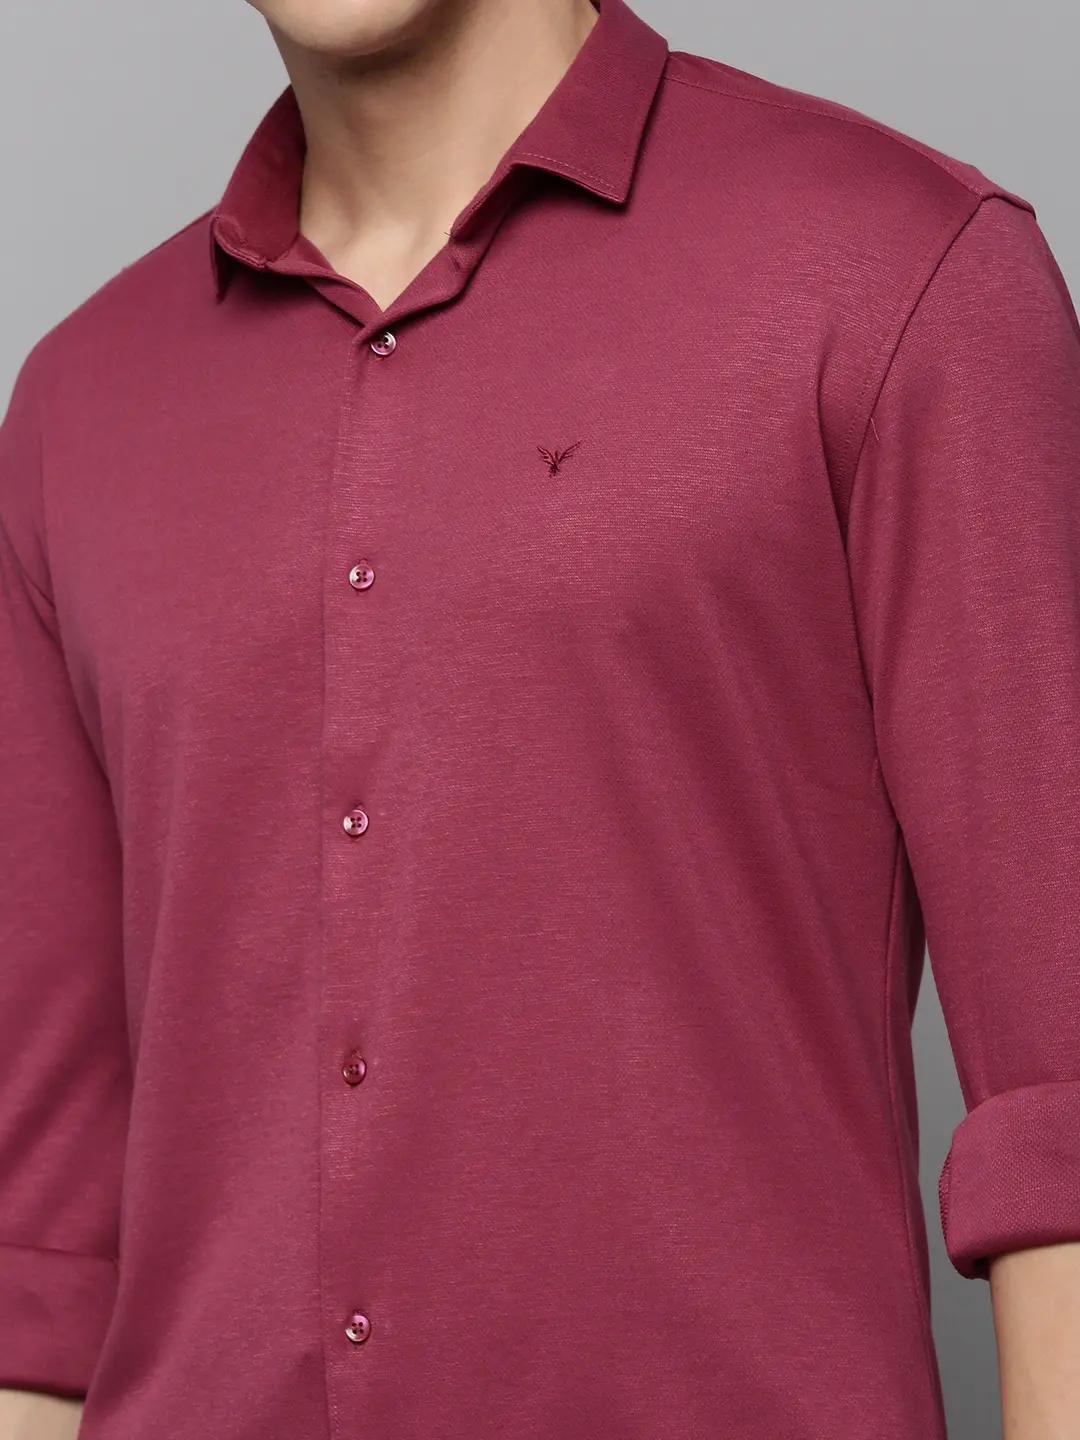 SHOWOFF Men's Spread Collar Pink Solid Shirt